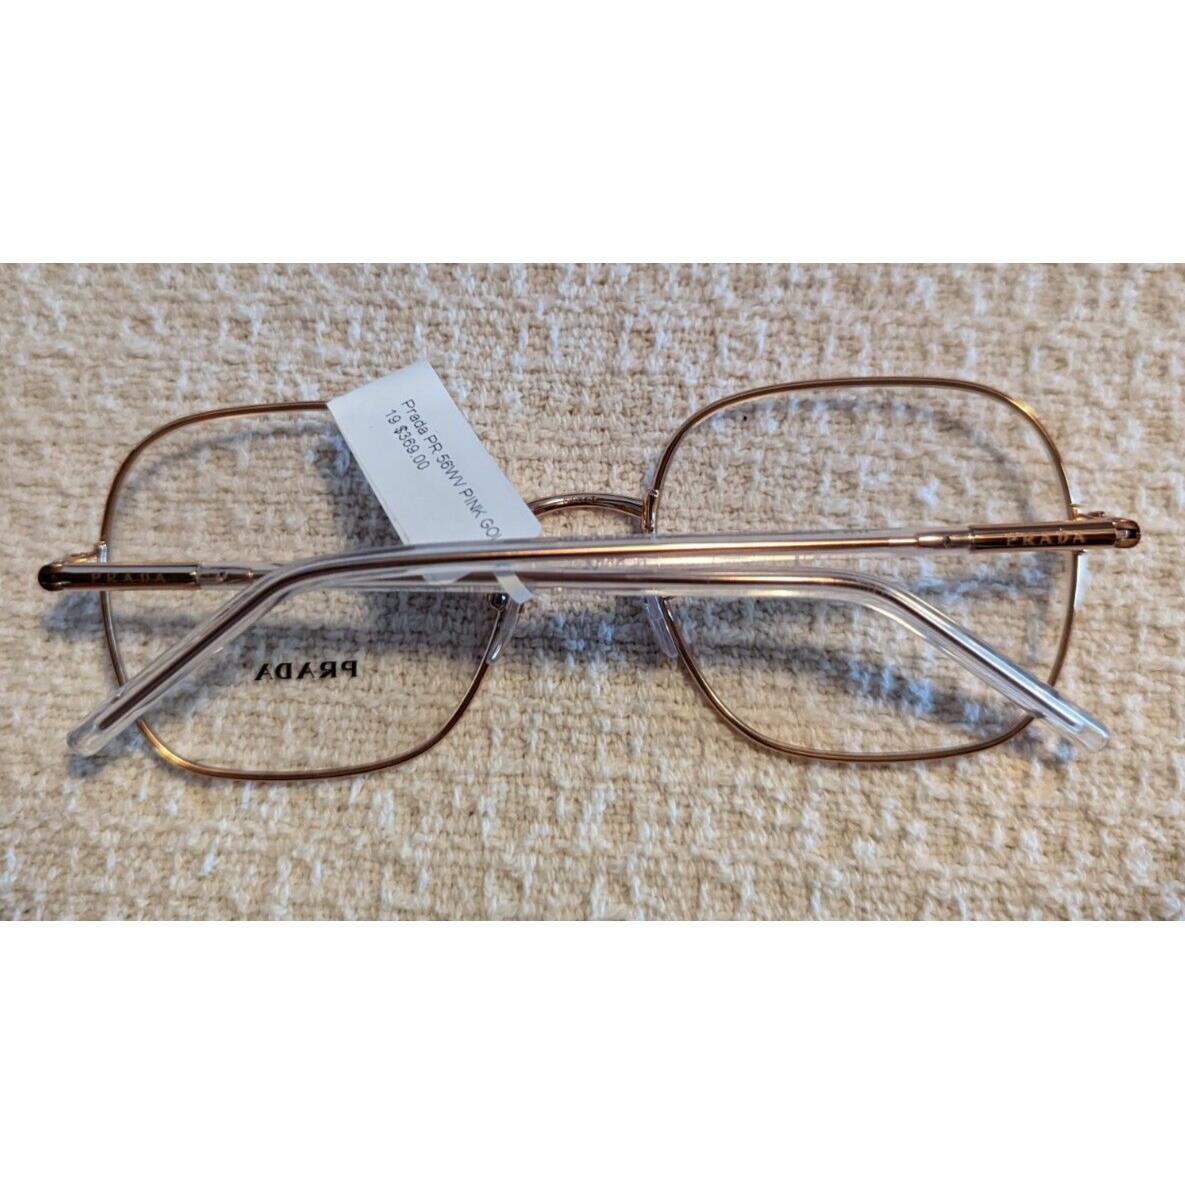 Prada eyeglasses SVF - Clear Frame 1